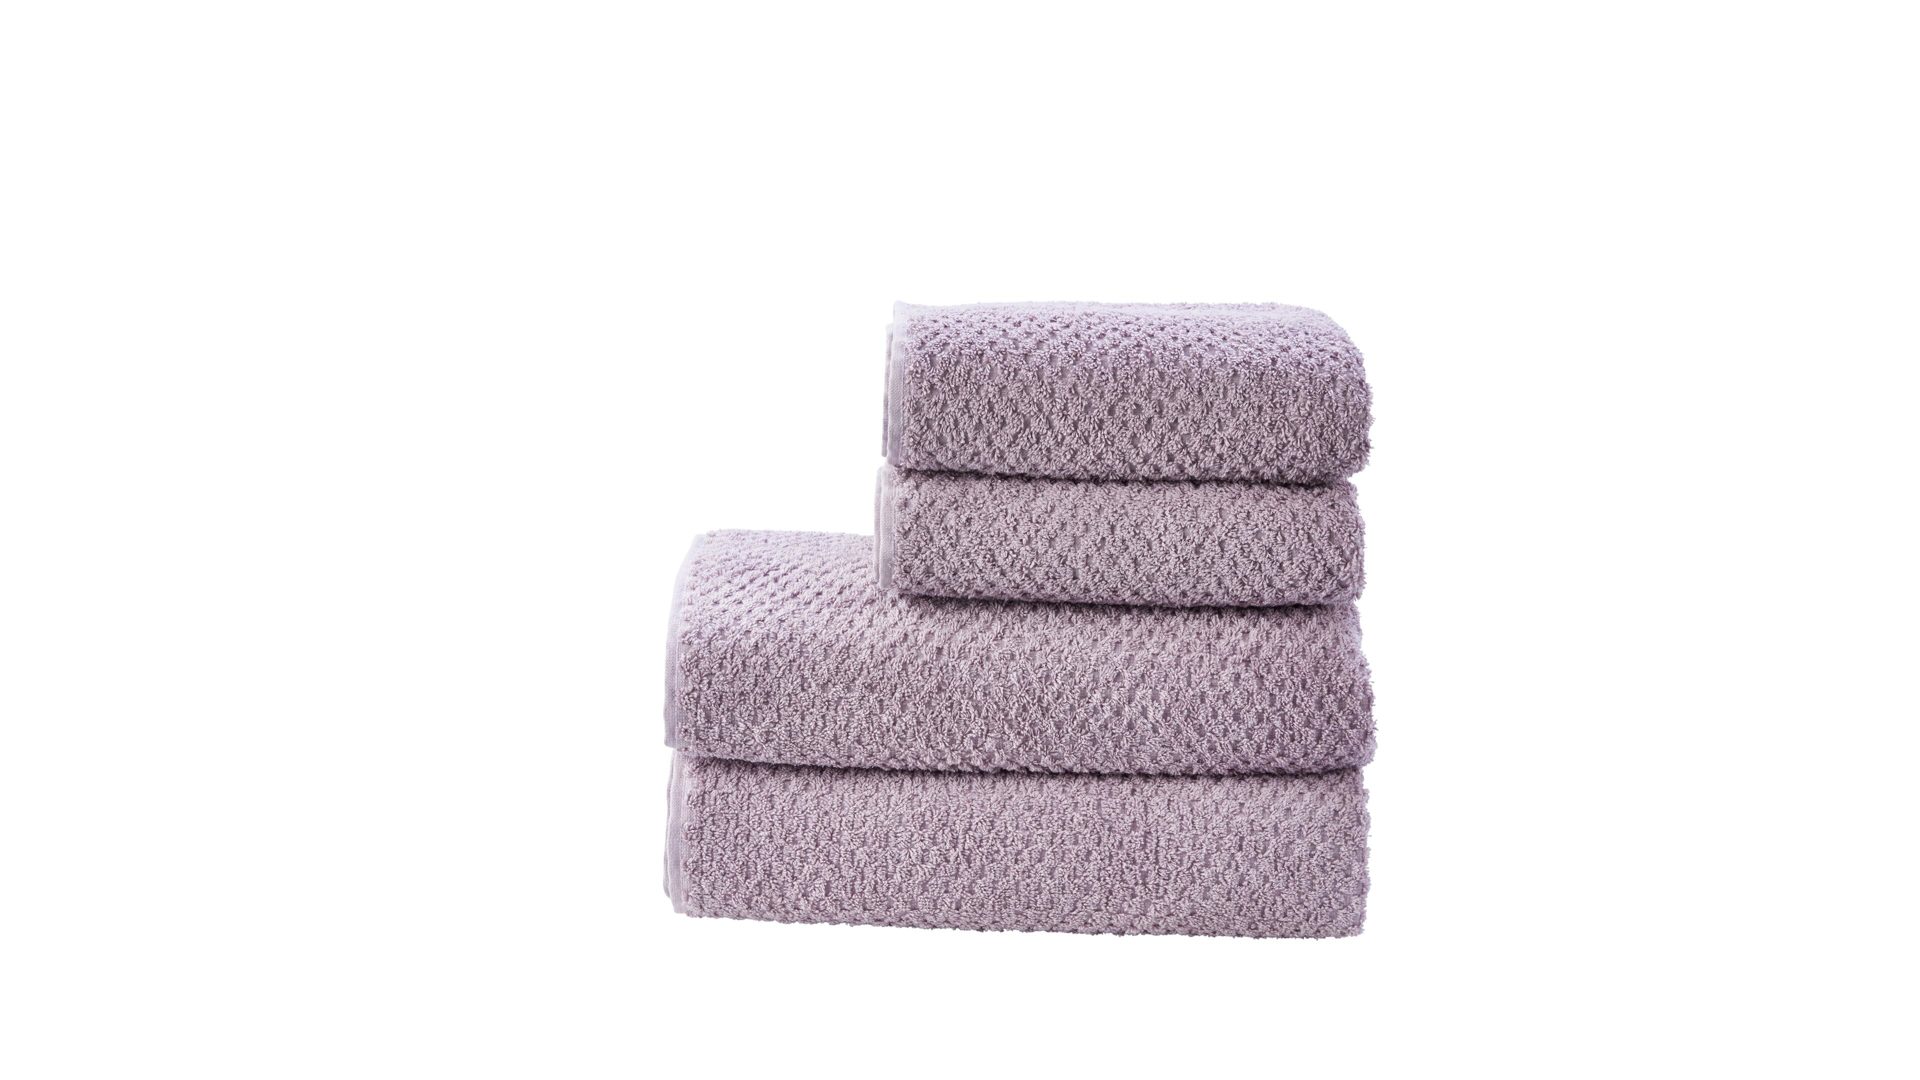 Handtuch-Set Done.® be different aus Stoff in Pastell DONE.® Handtuch-Set Provence Honeycomb altrosafarbene Baumwolle – vierteilig